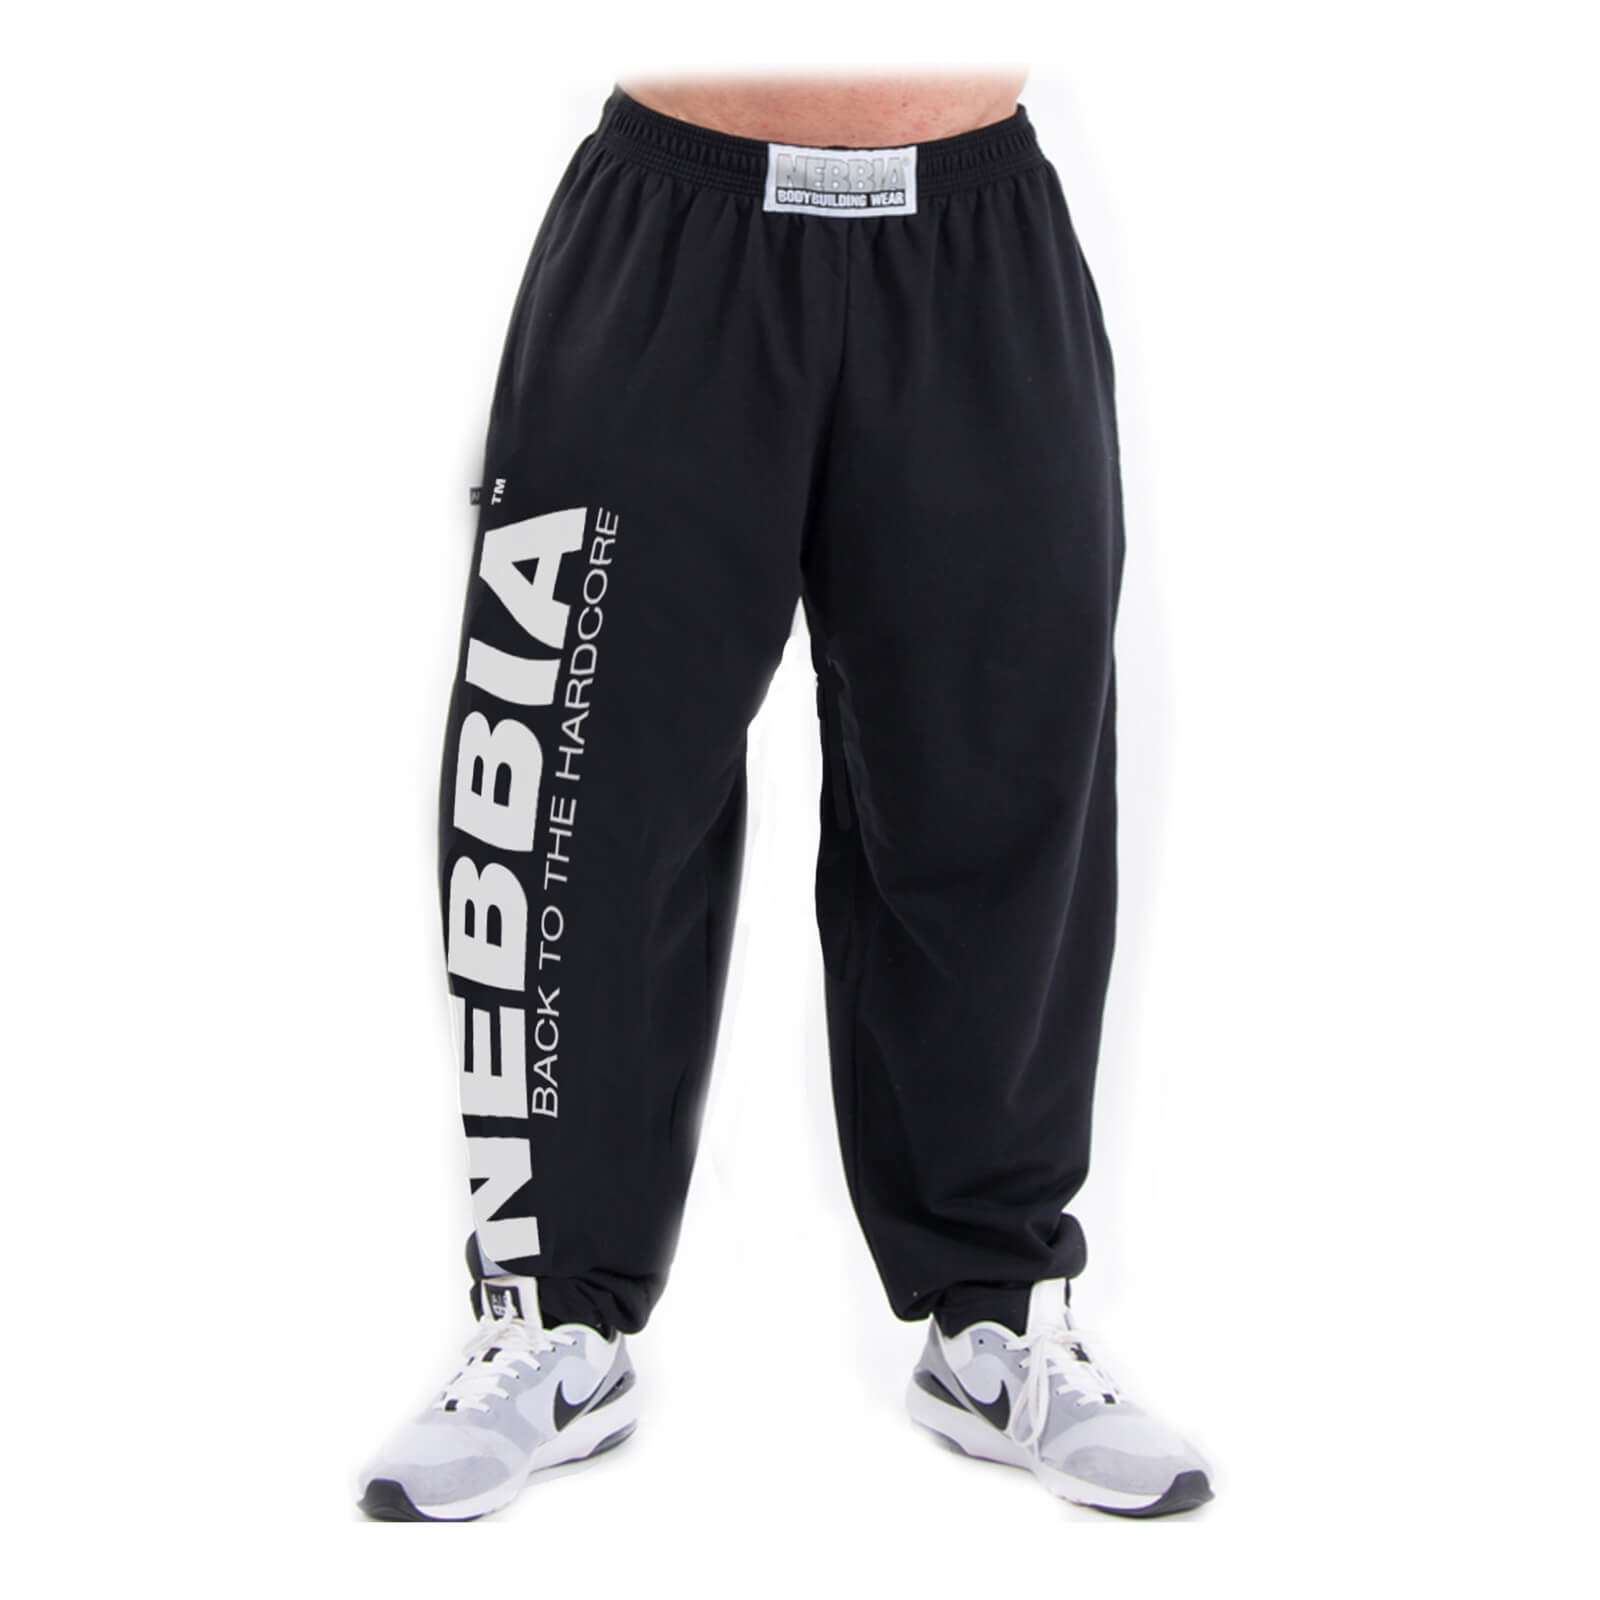 Hardcore Fitness Sweatpants, black, Nebbia